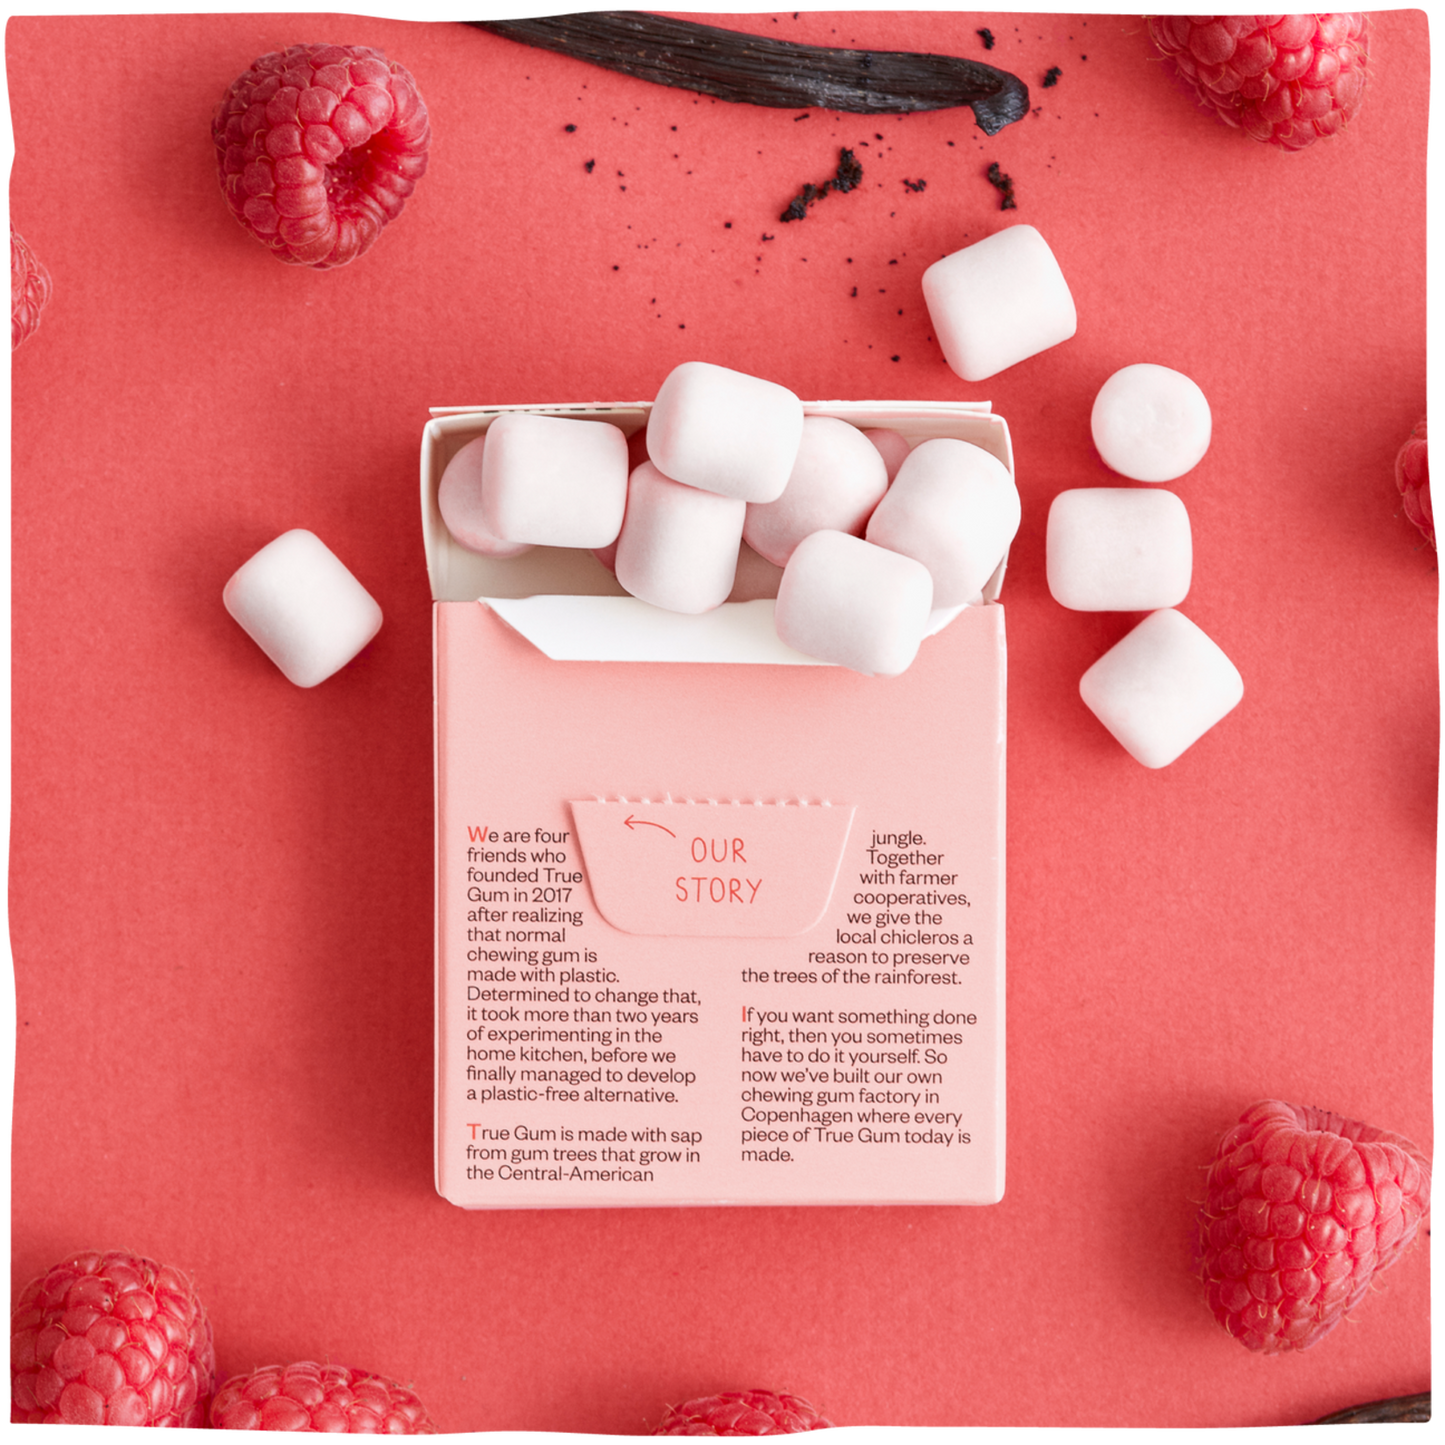 True Gum Sugar Free Gum Single Pack (21g) Or A Box Of 24, Raspberry & Vanilla Flavour Plastic Free Packaging